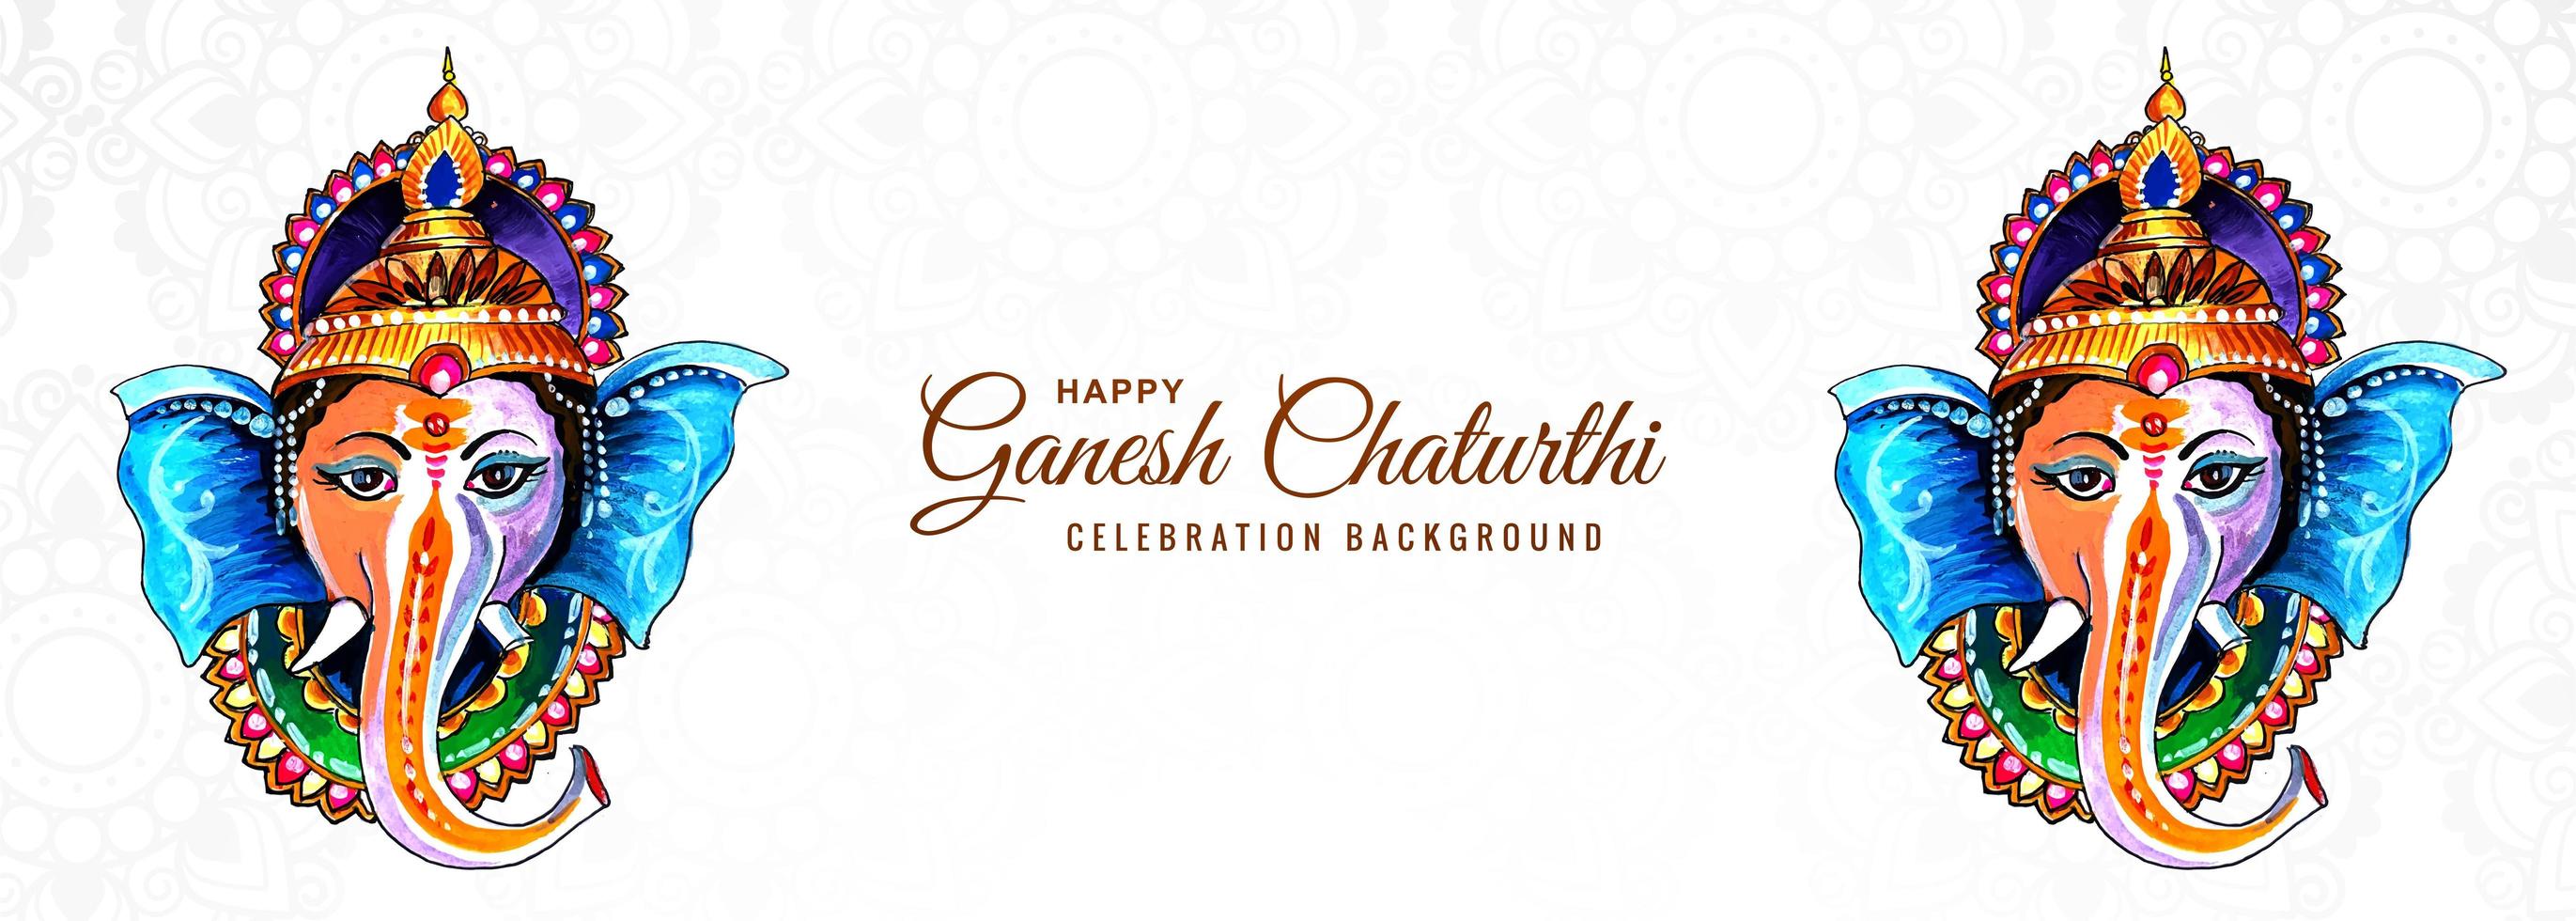 dios hindú ganesha para feliz festival de ganesh chaturthi banner vector